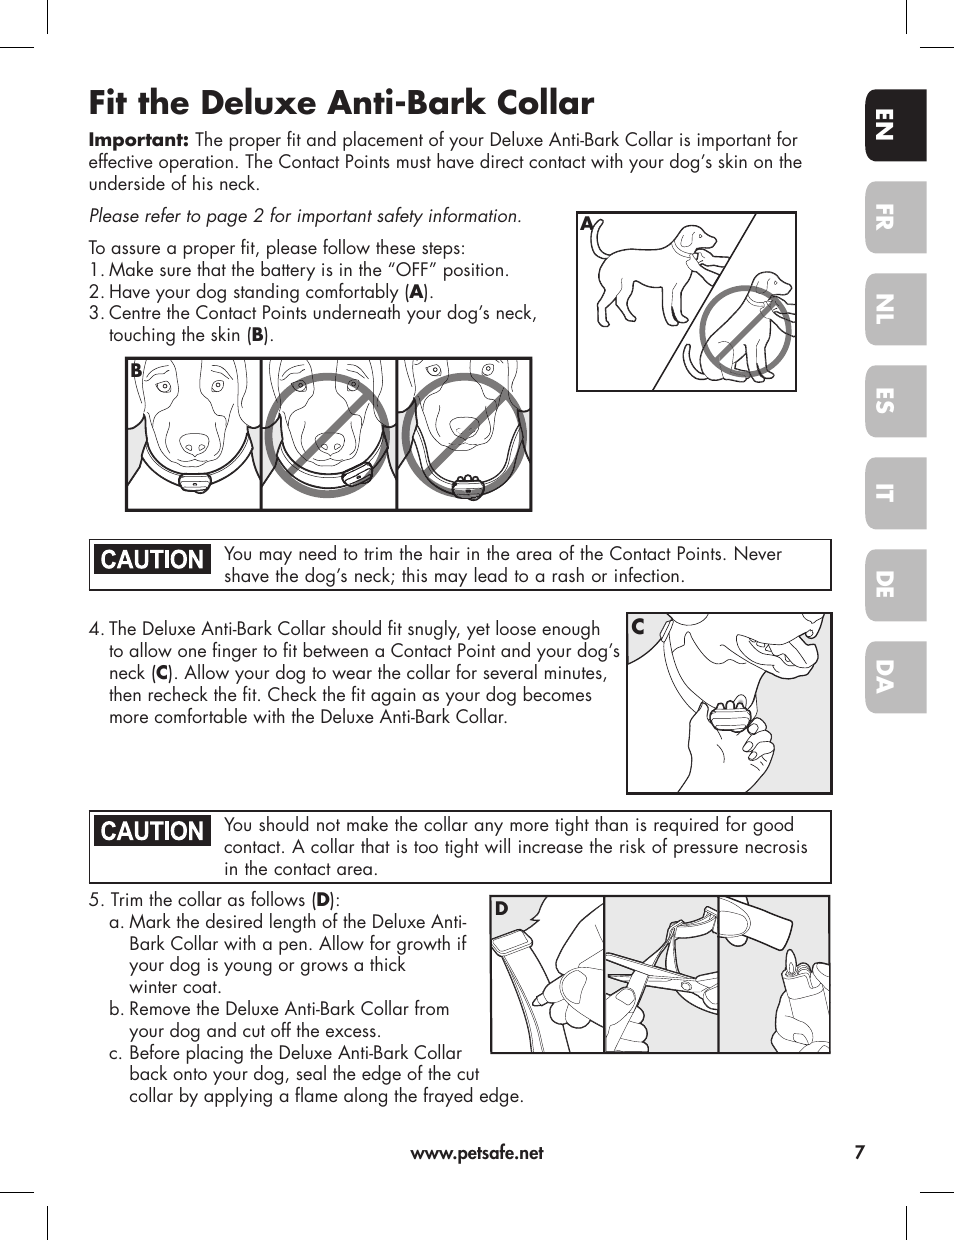 Fit the deluxe antibark collar Petsafe Elite Big Dog Bark Control User Manual Page 7 / 88